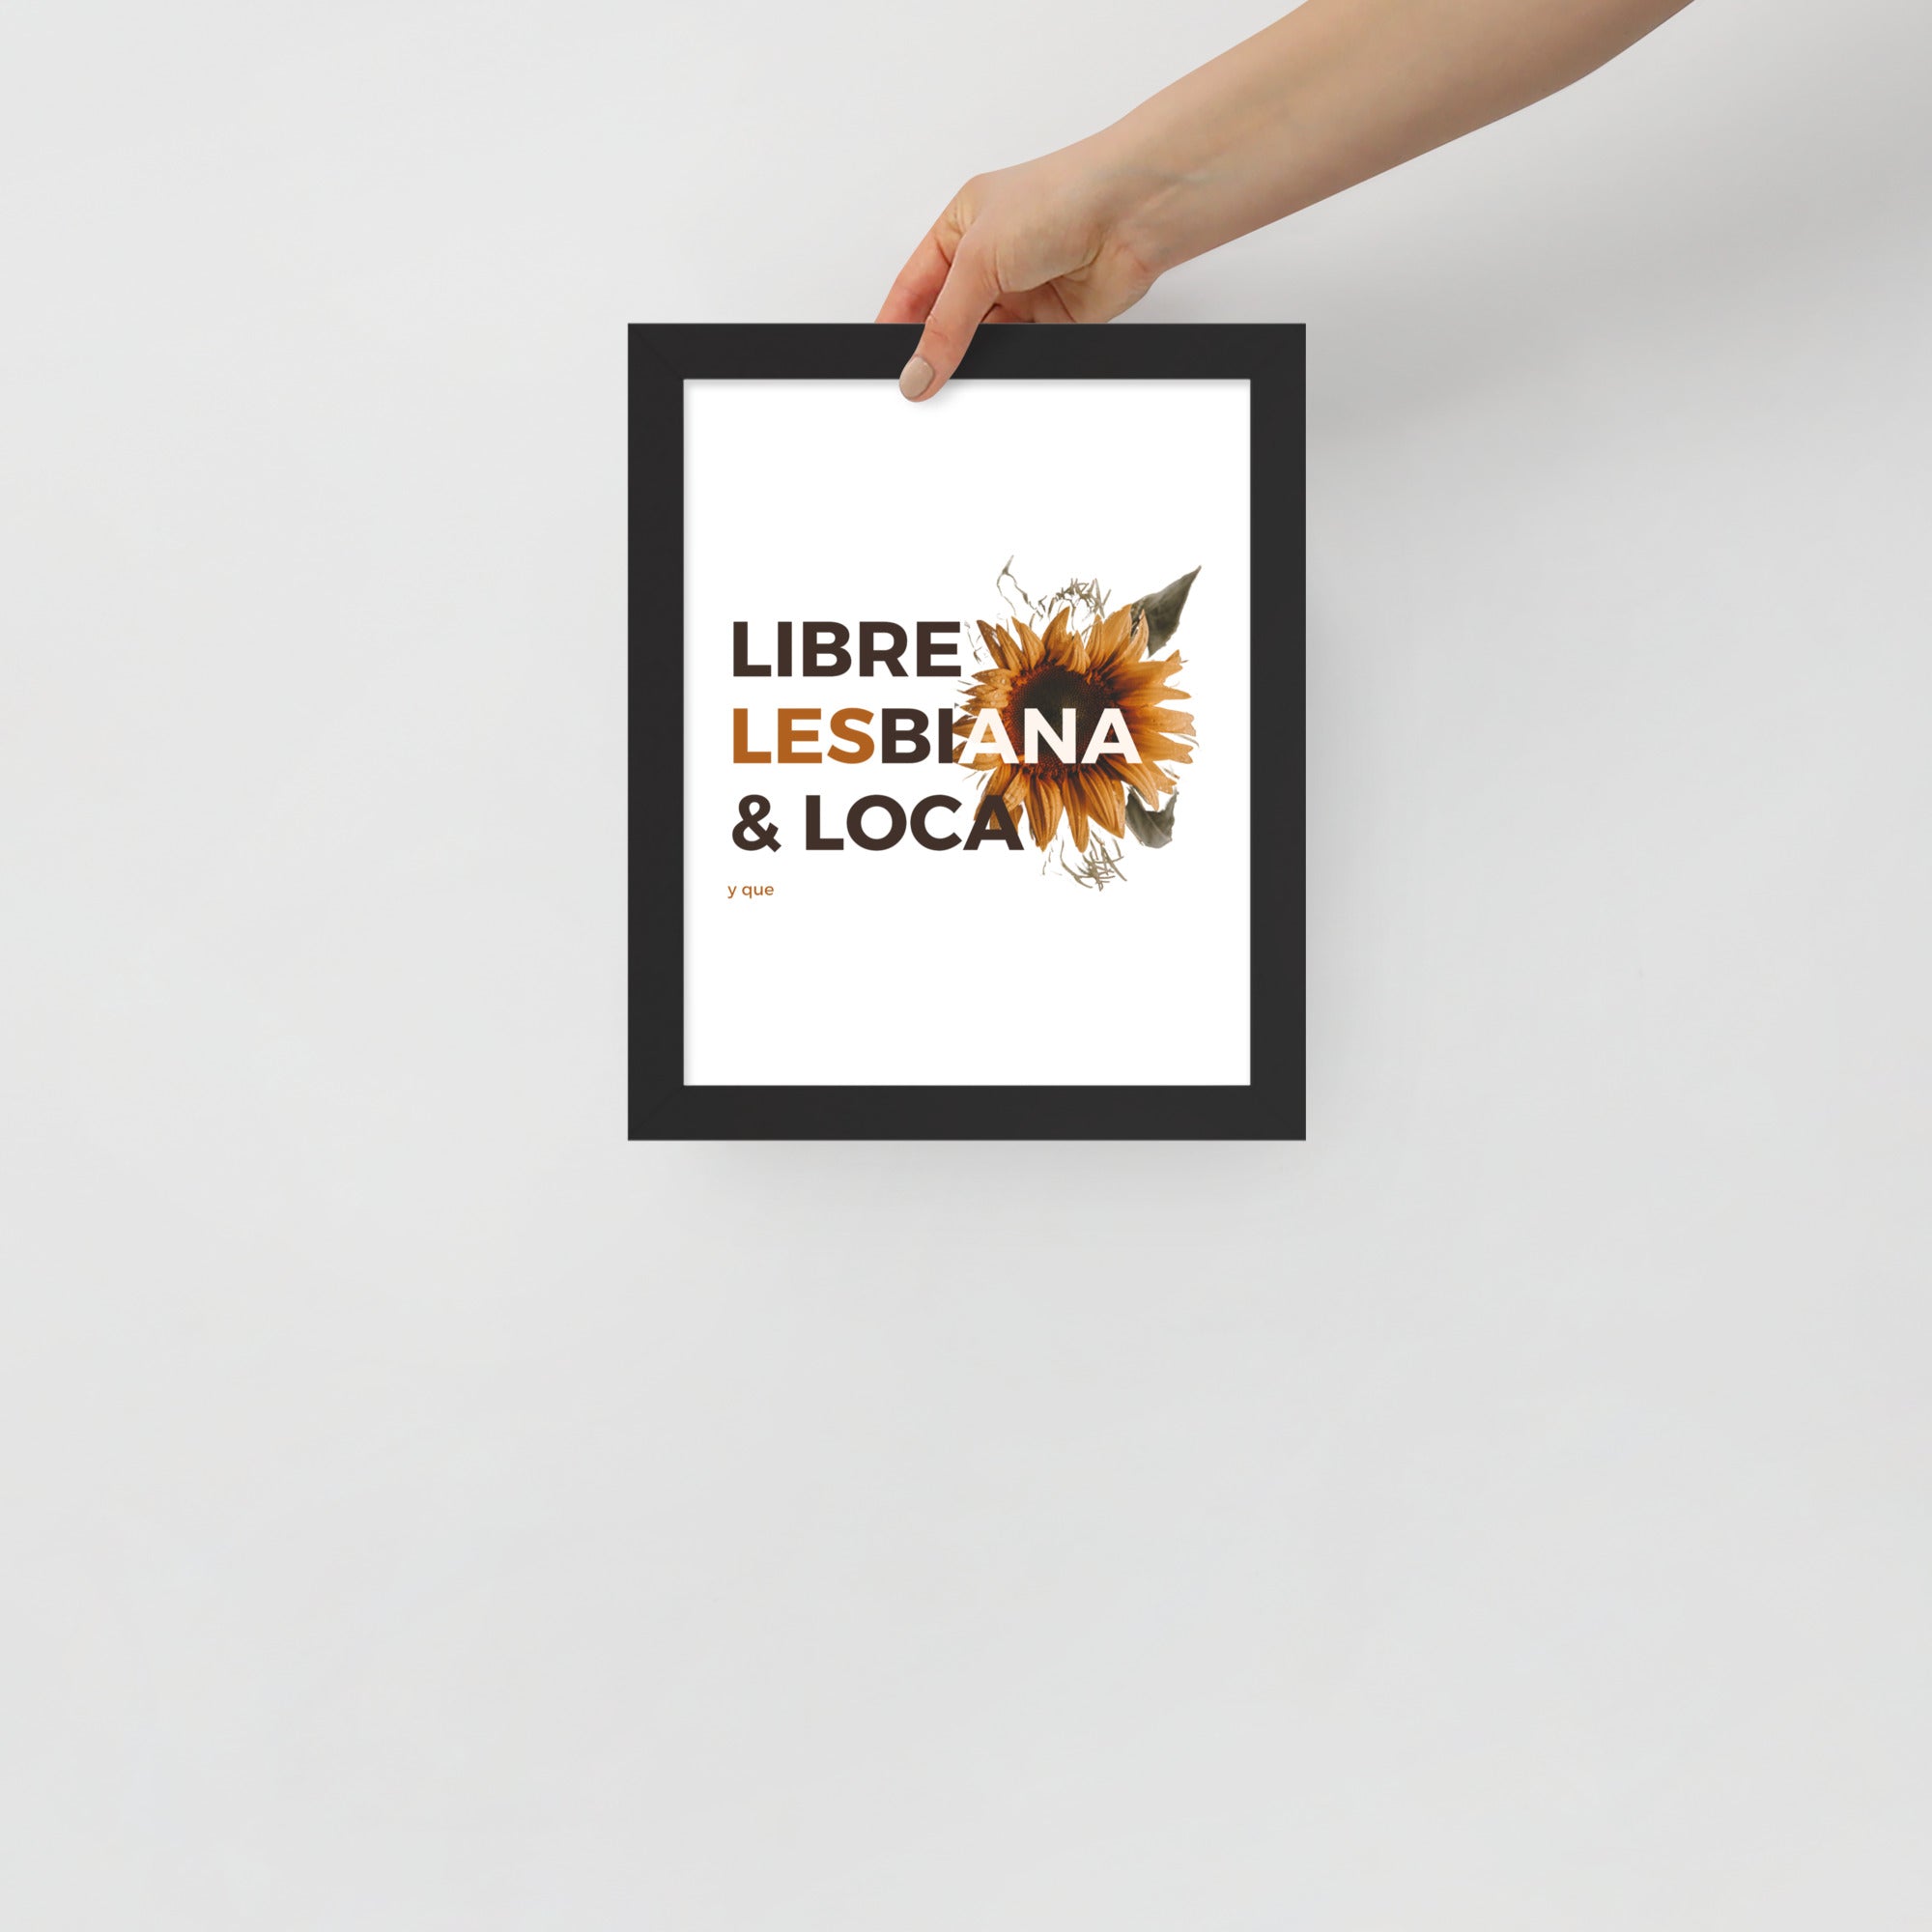 Libre, Les(bi)ana, Loca Framed poster